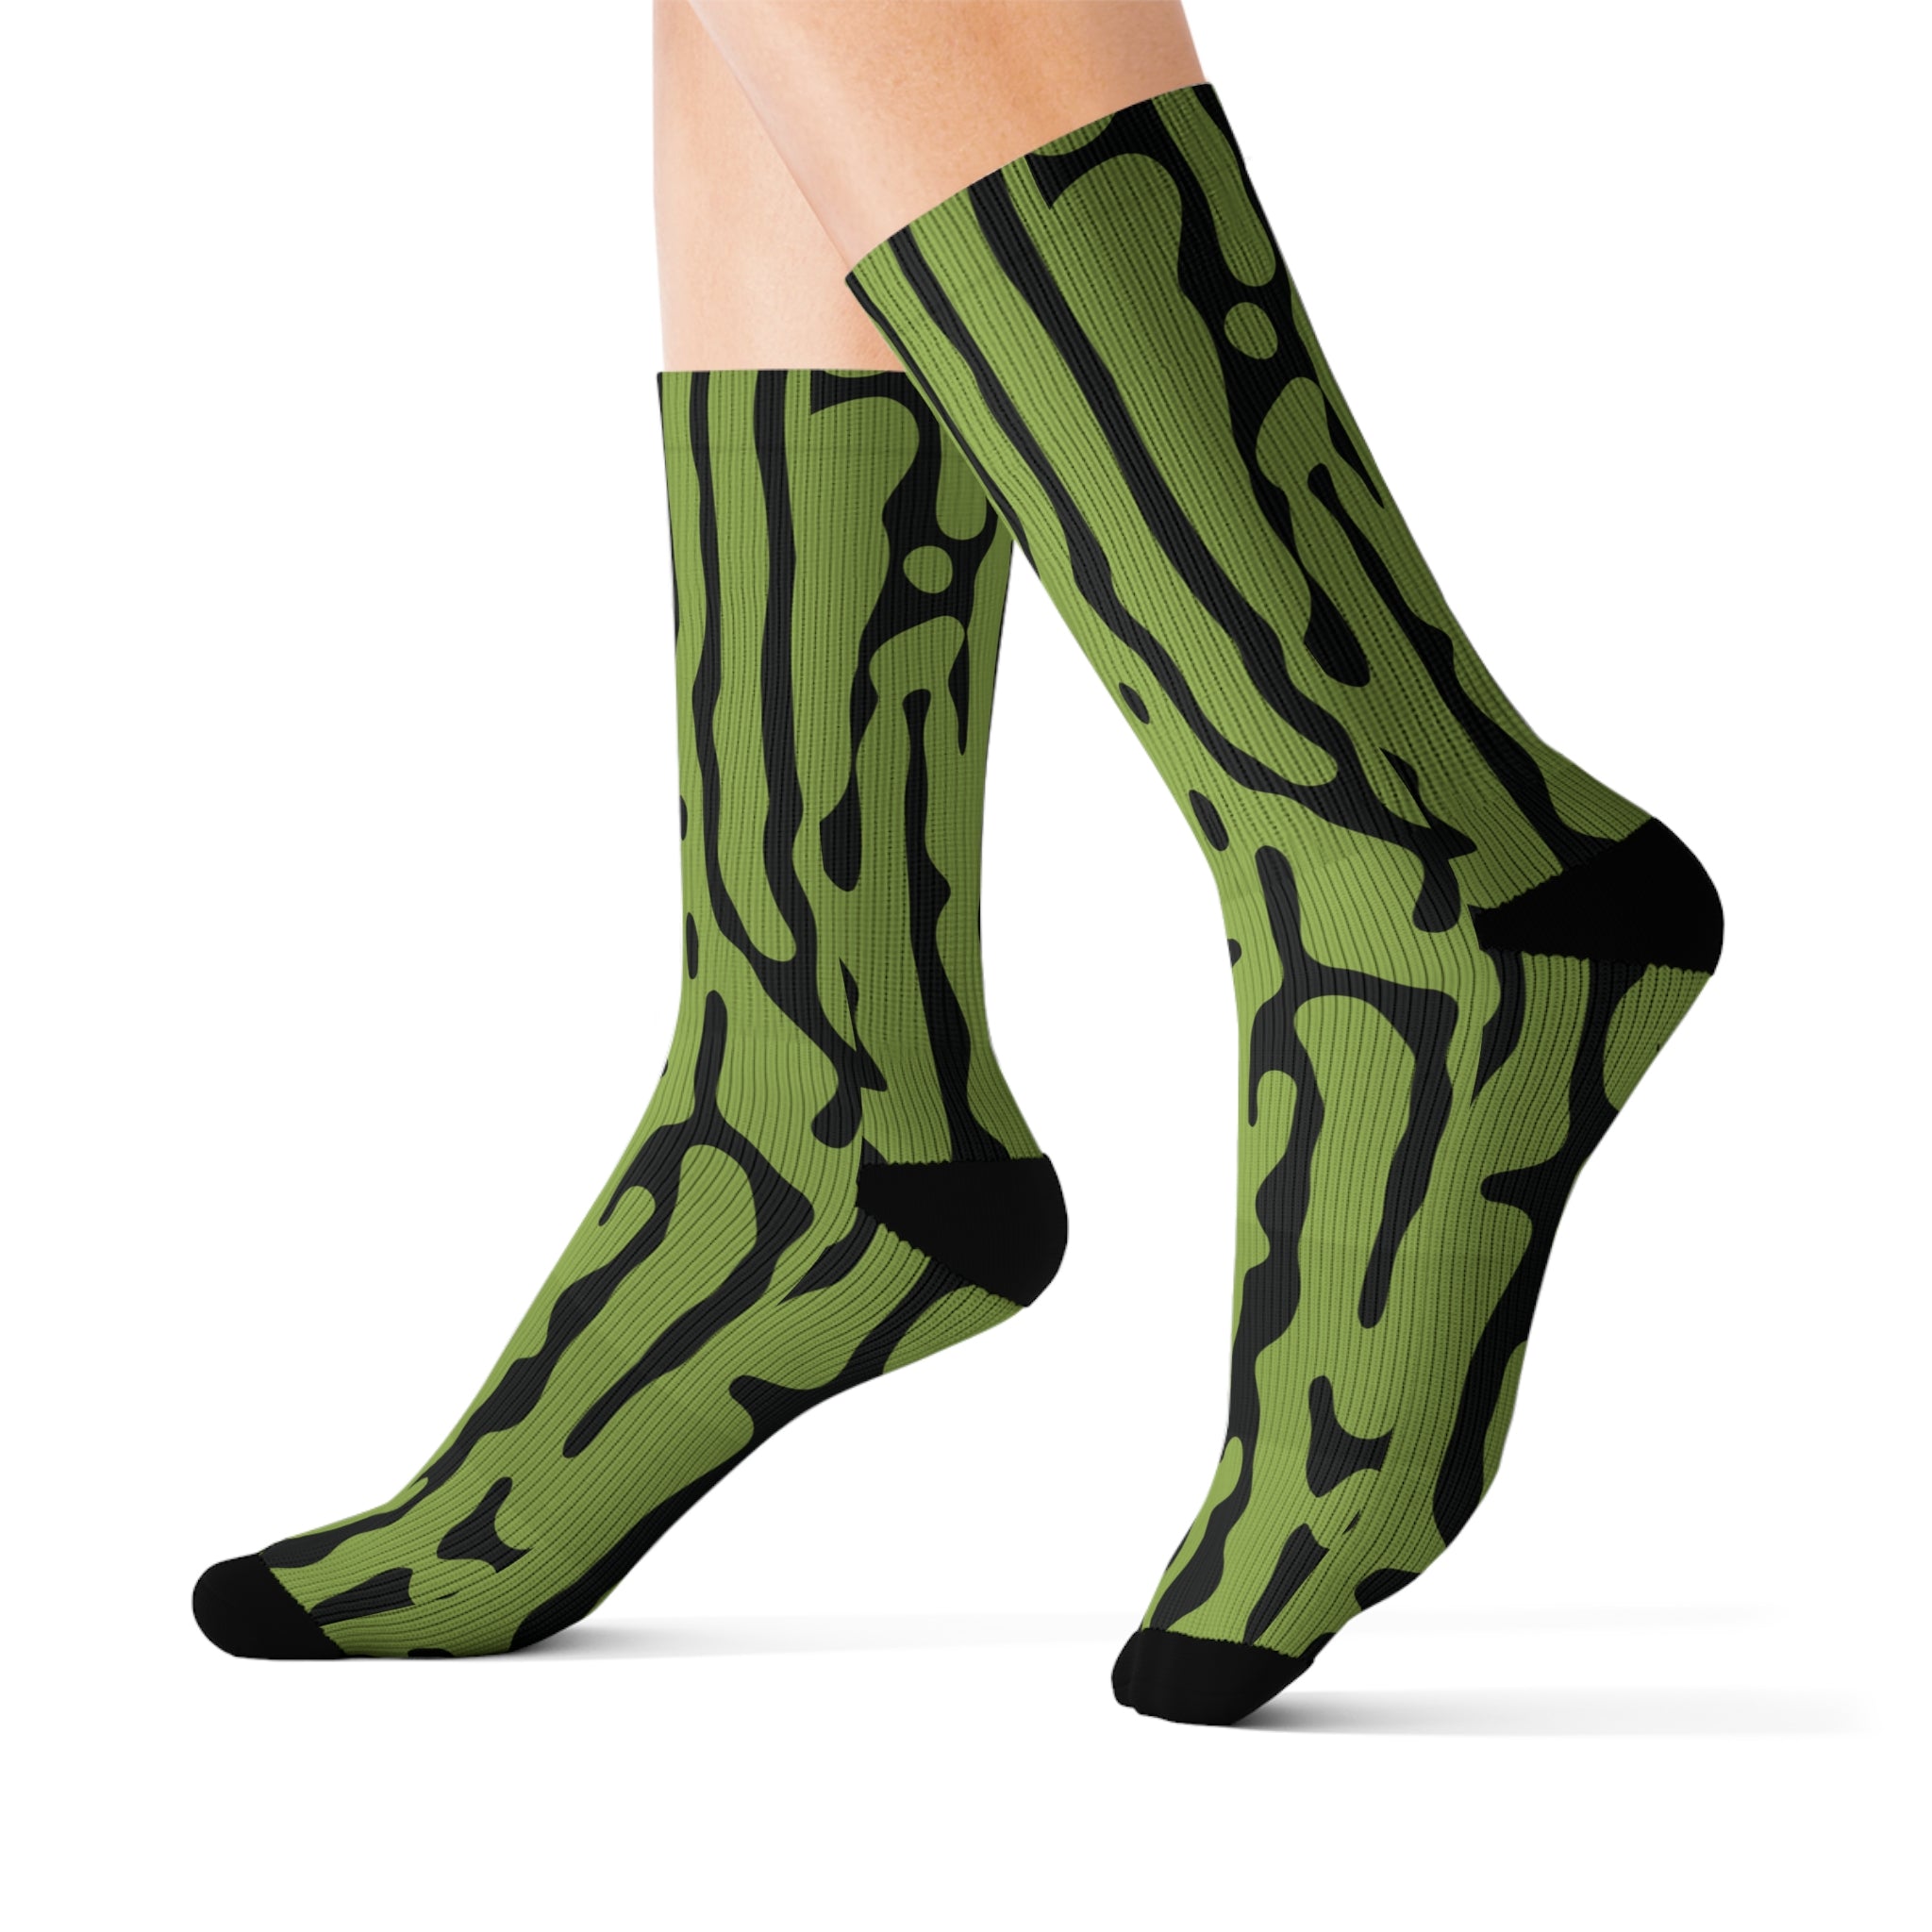 "Cactus" Socks